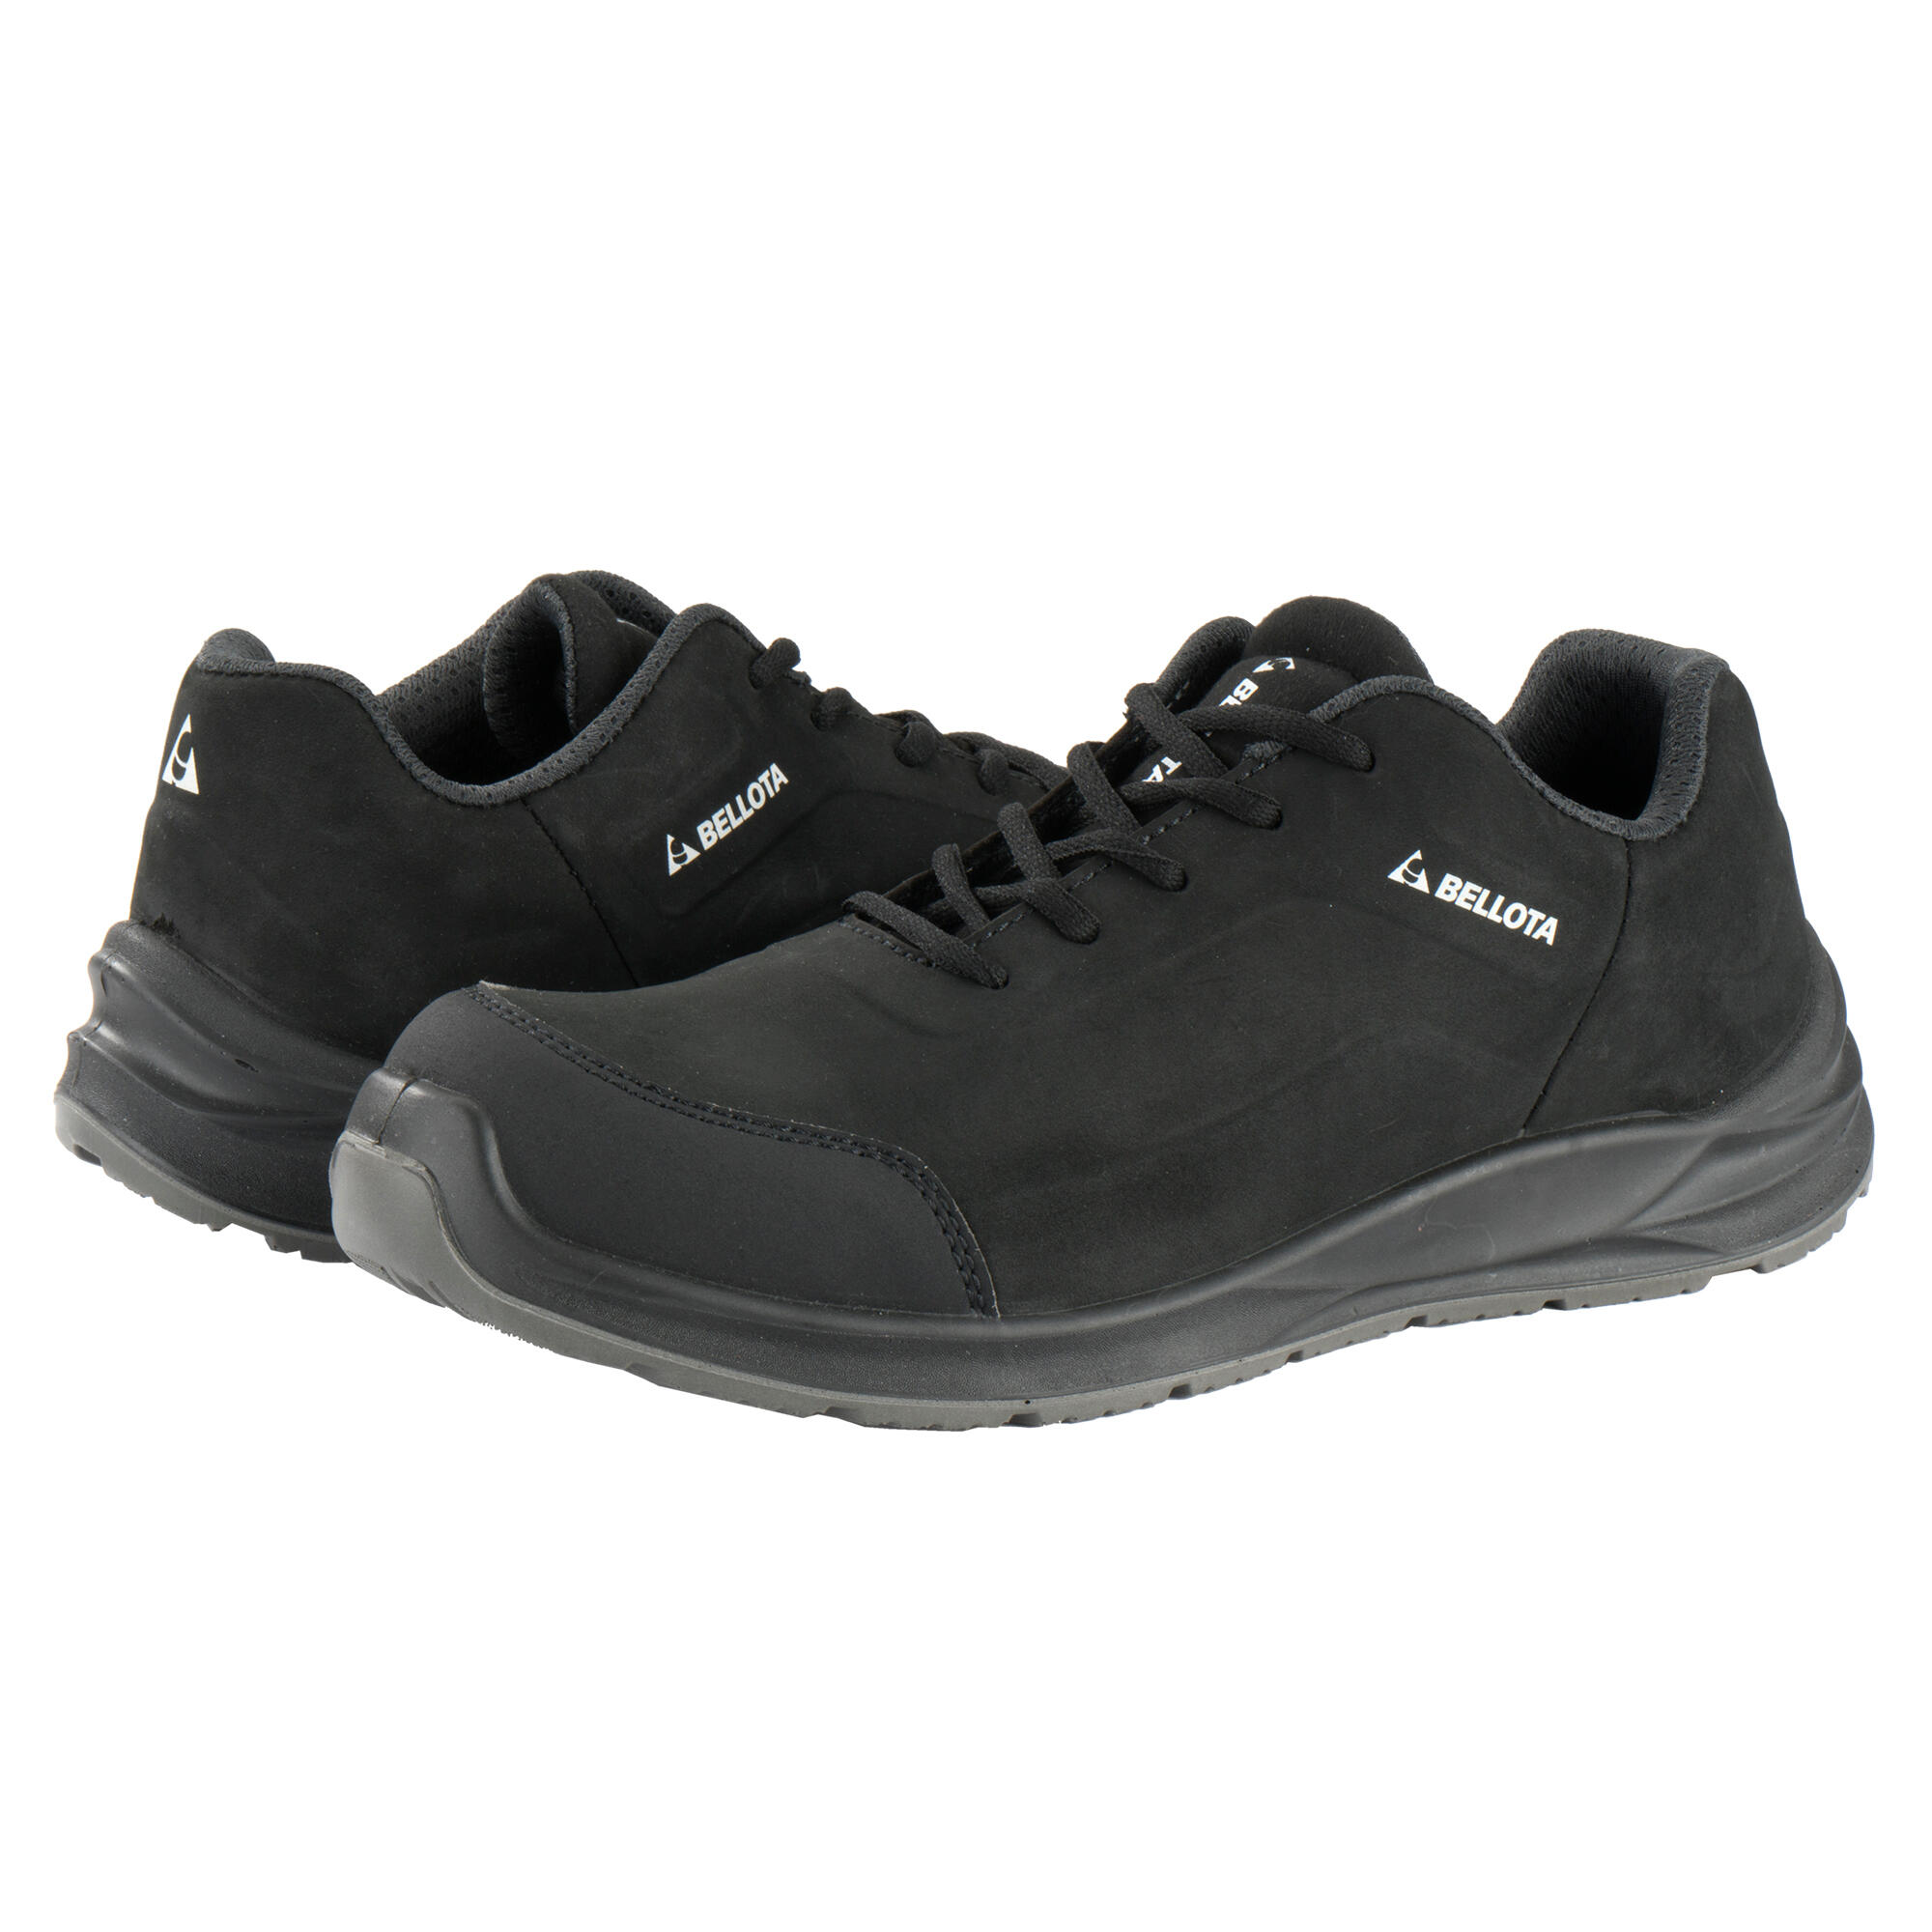 Zapatos seguridad BELLOTA FLEX negro T44 | Leroy